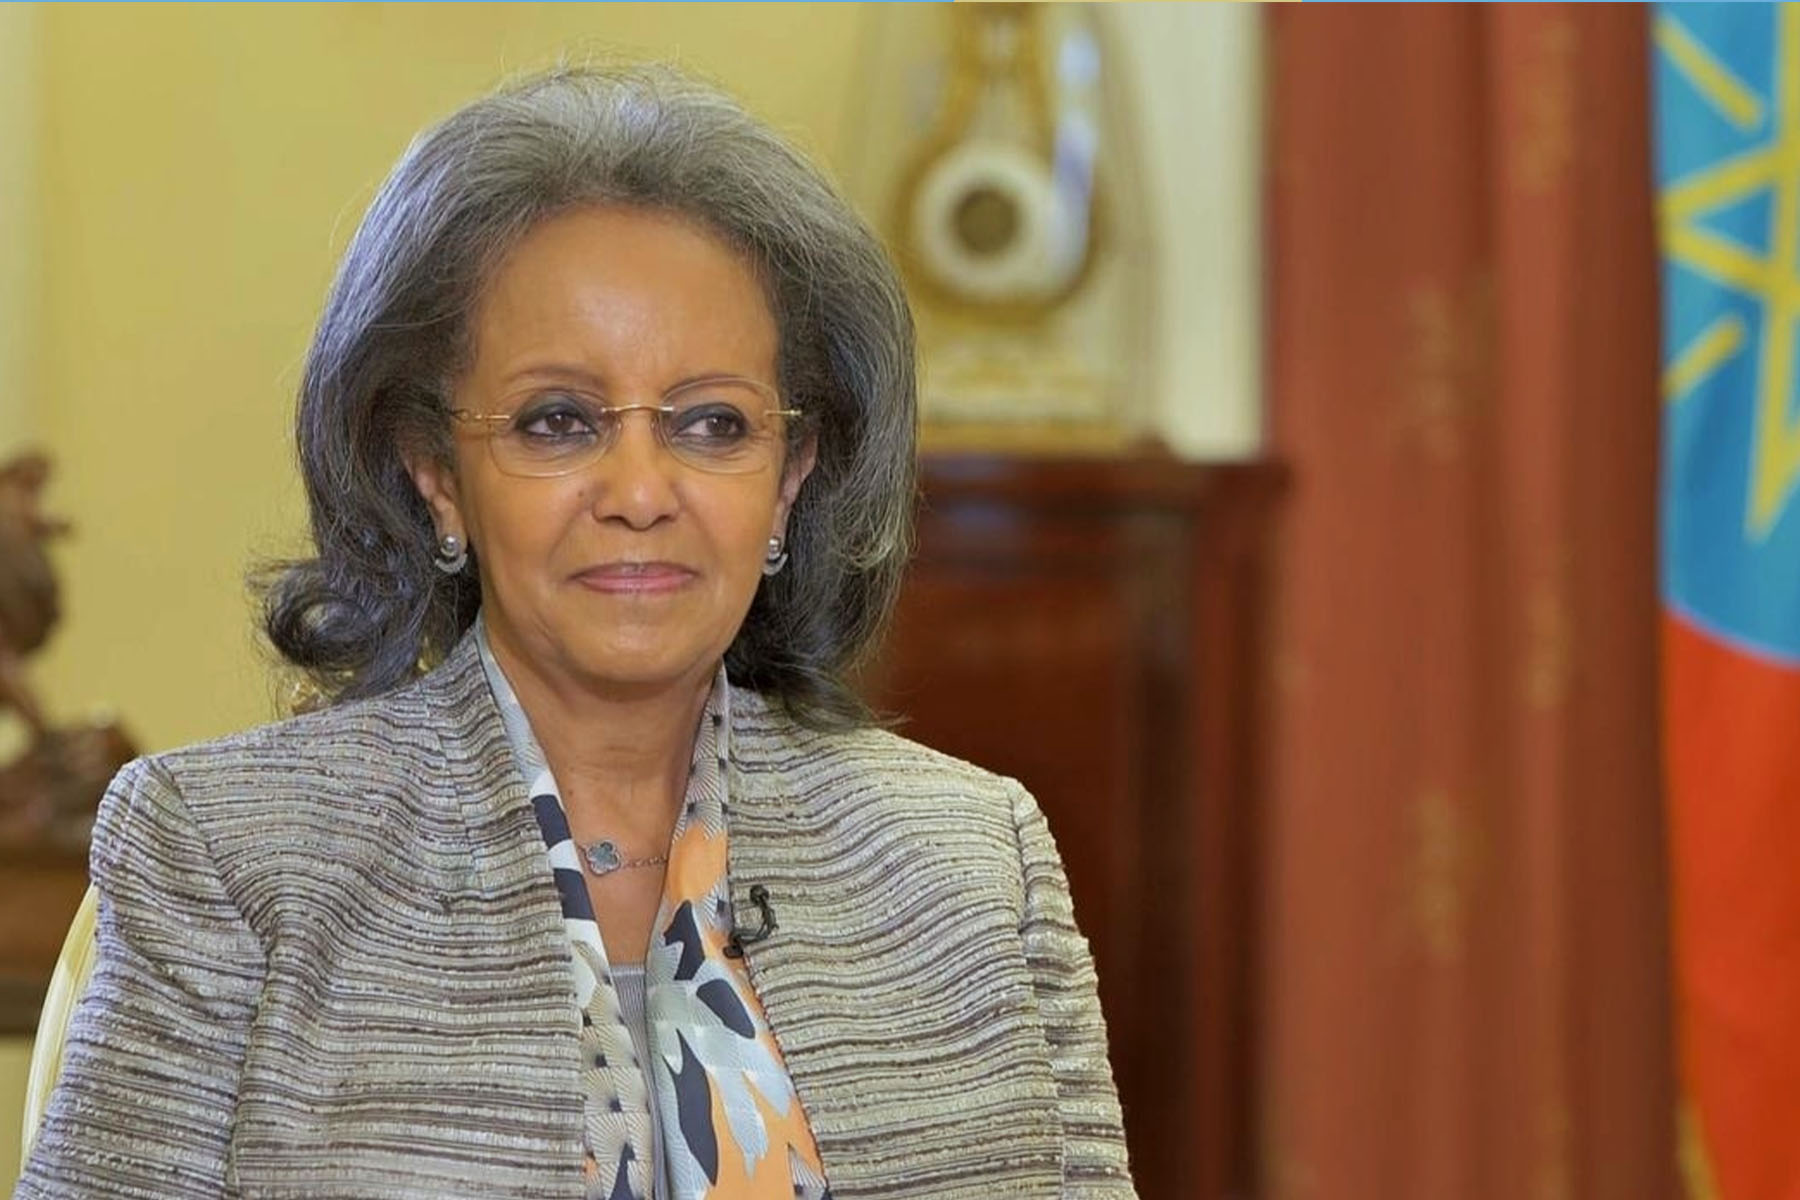 President of Ethiopia, Sahle-Work Zewde